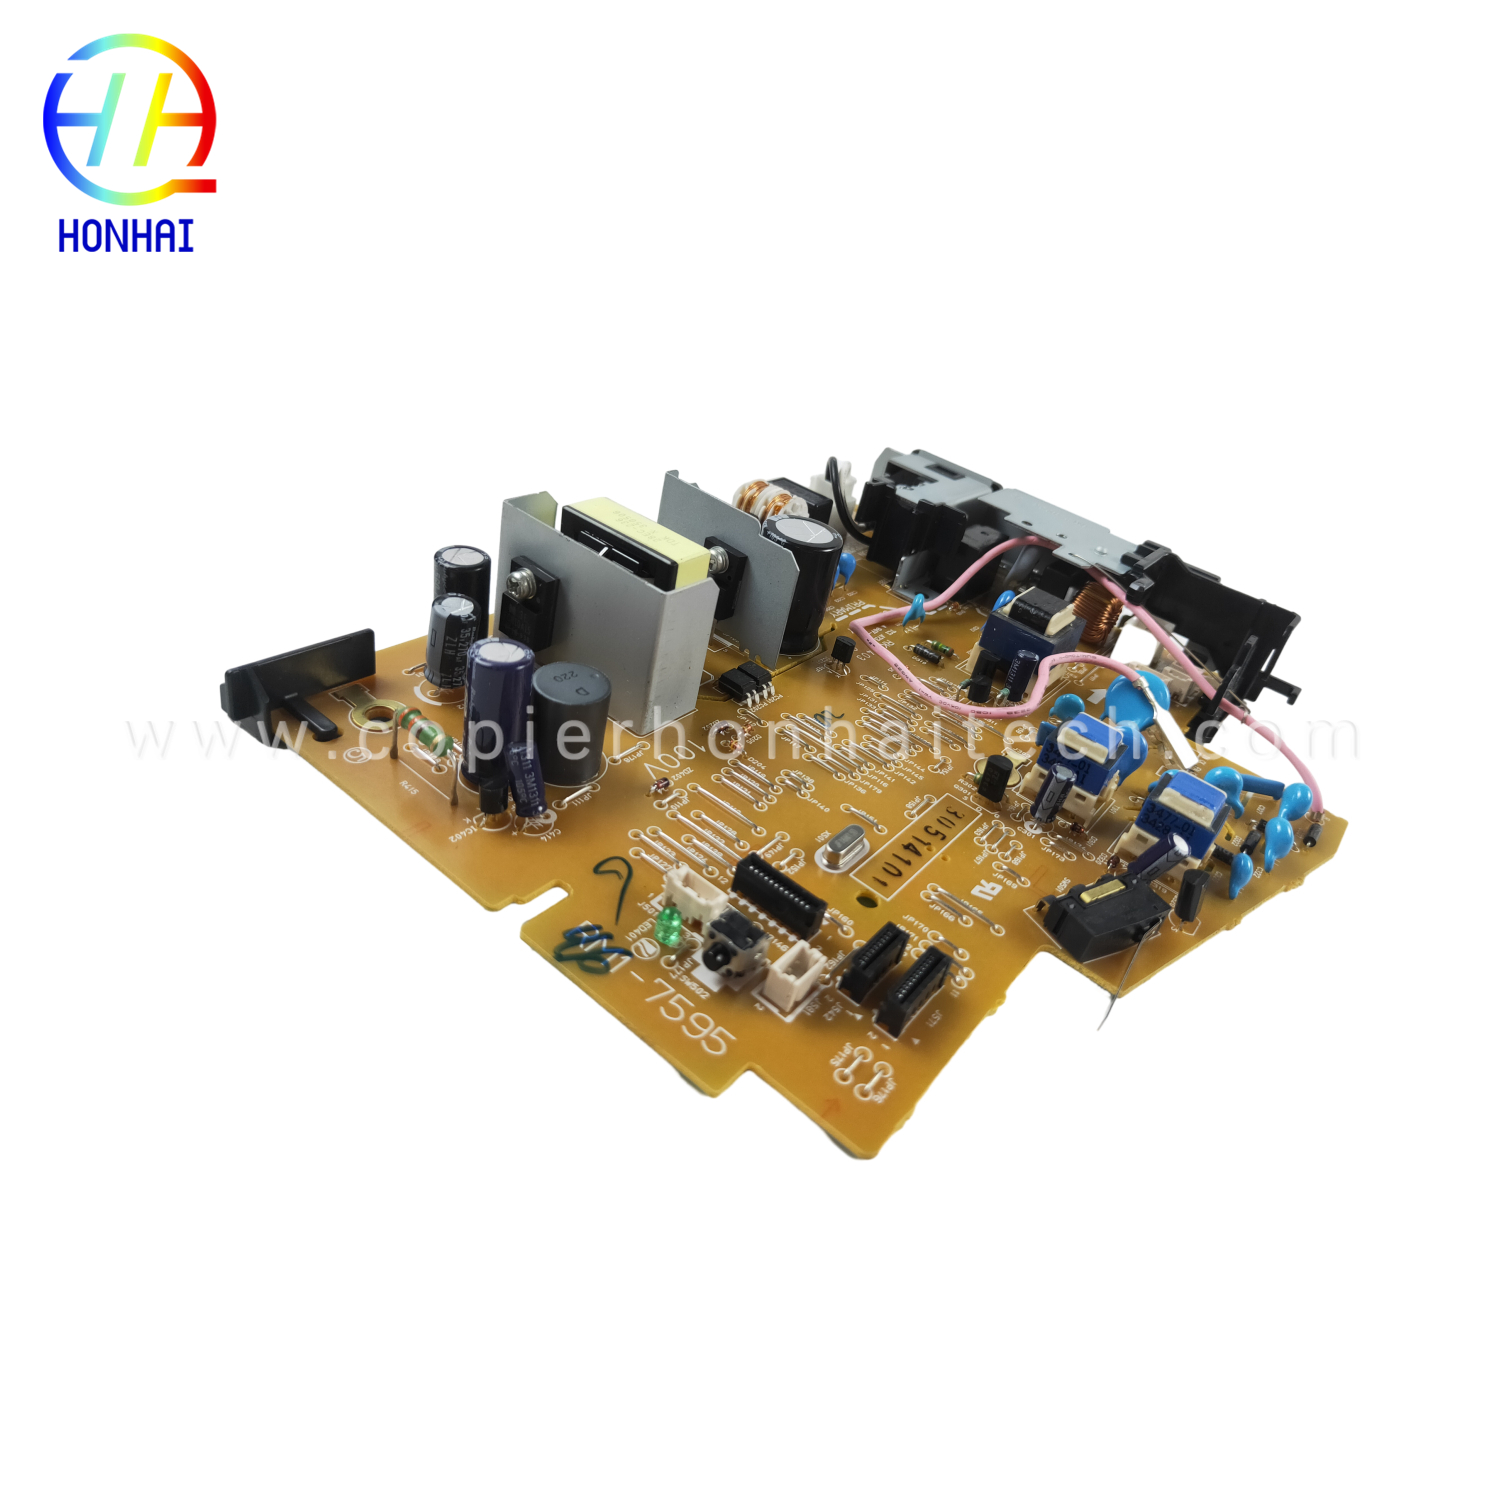 https://www.copierhonhaitech.com/power-supply-board-110v-origen-95-new-for-hp-p1102w-rm1-7595-engine-control-power-board-product/